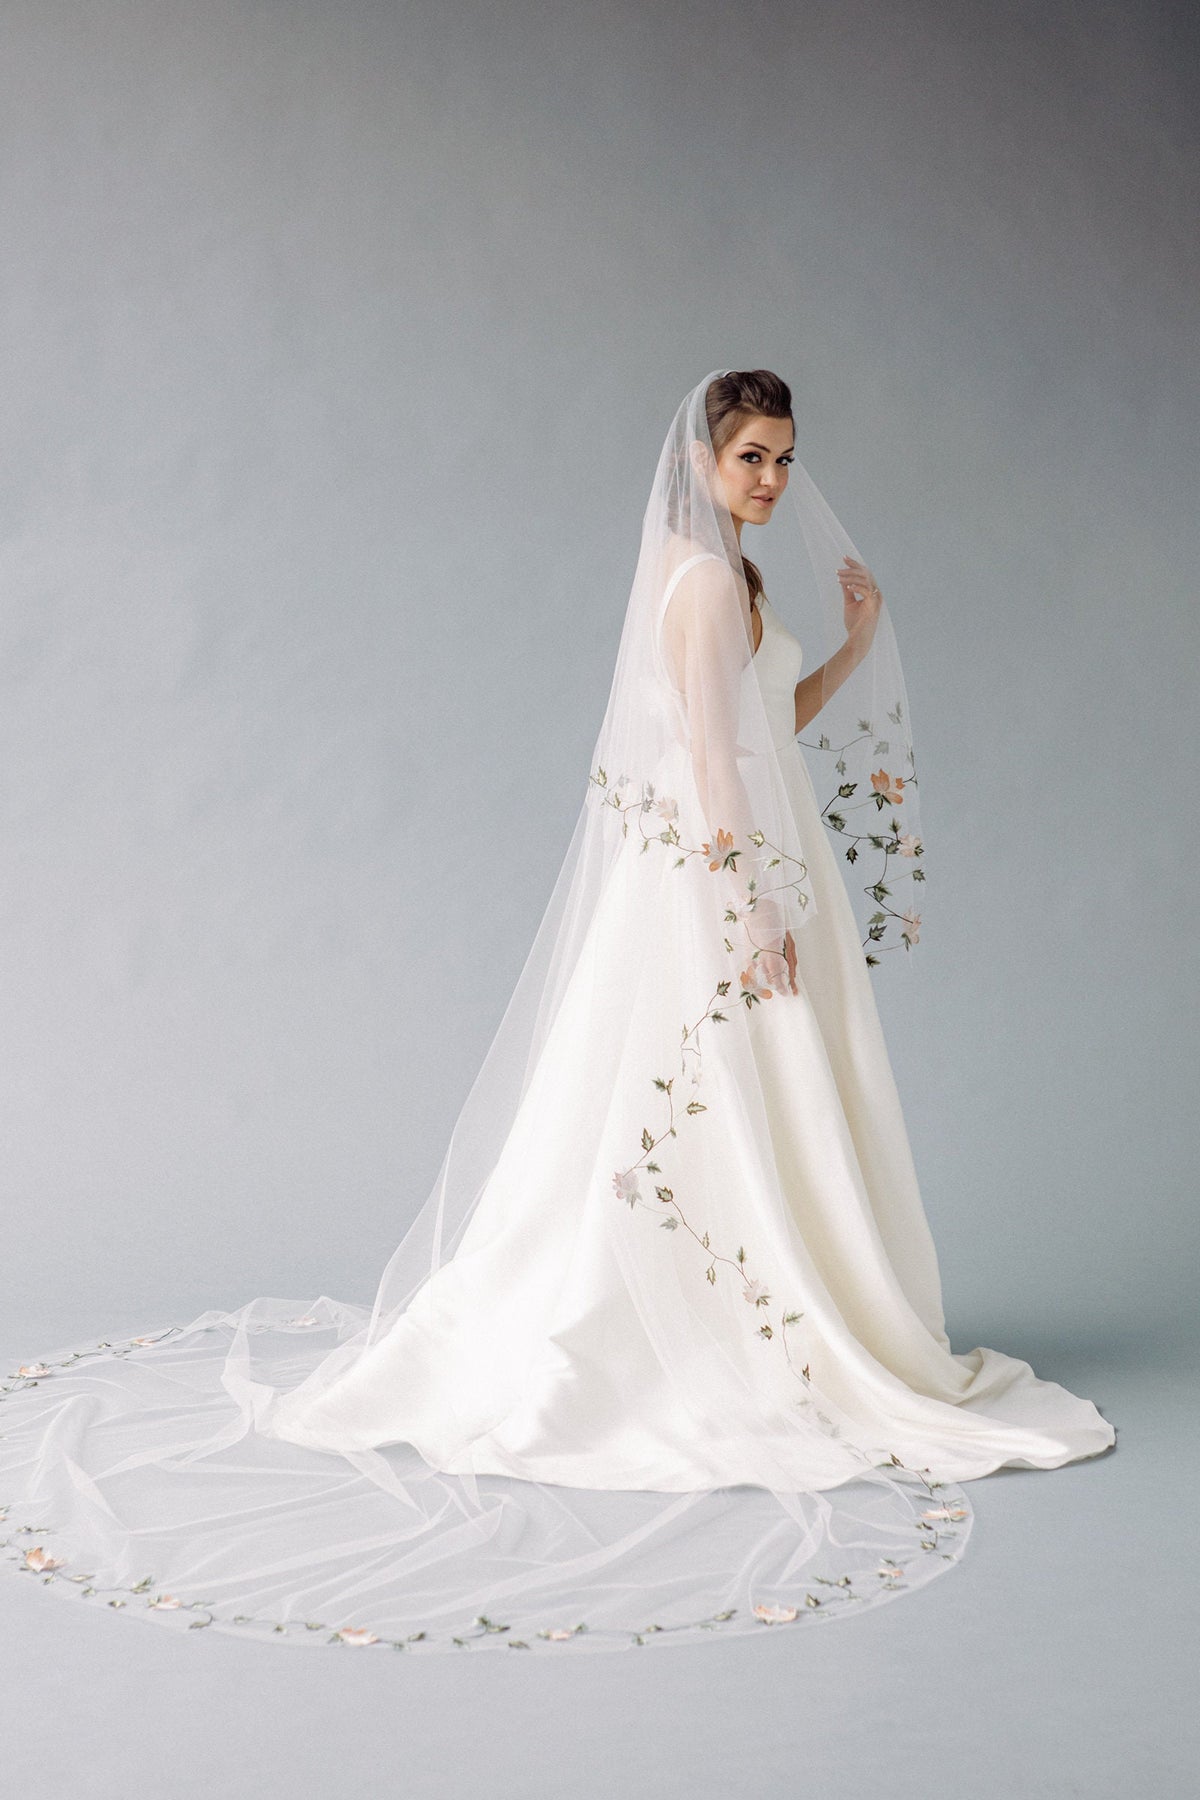 Bridal Veils Embroidered Vines Sage Emerald Peach Blooms Wedding Veil Cathedral Length Floral Design Blusher